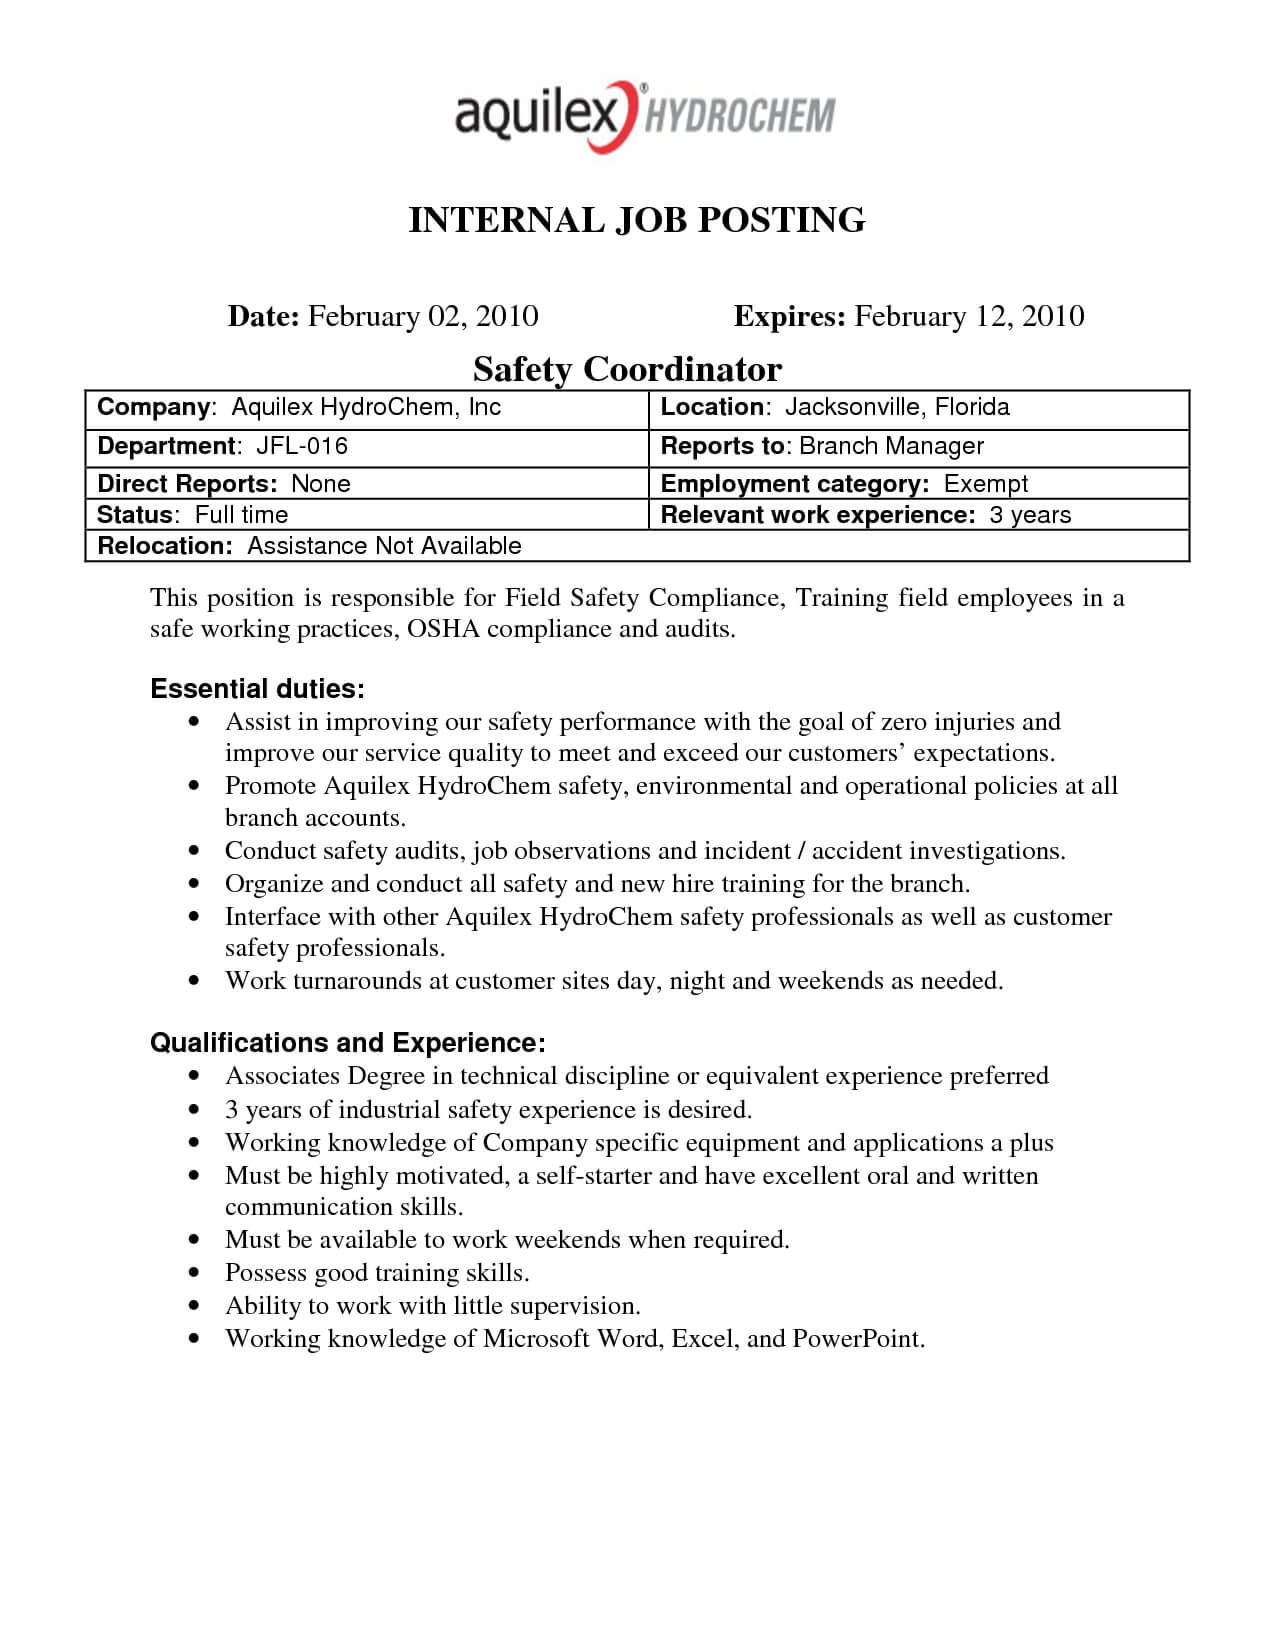 Best Photos Of Internal Job Posting Template Word - Resume In Internal Job Posting Template Word